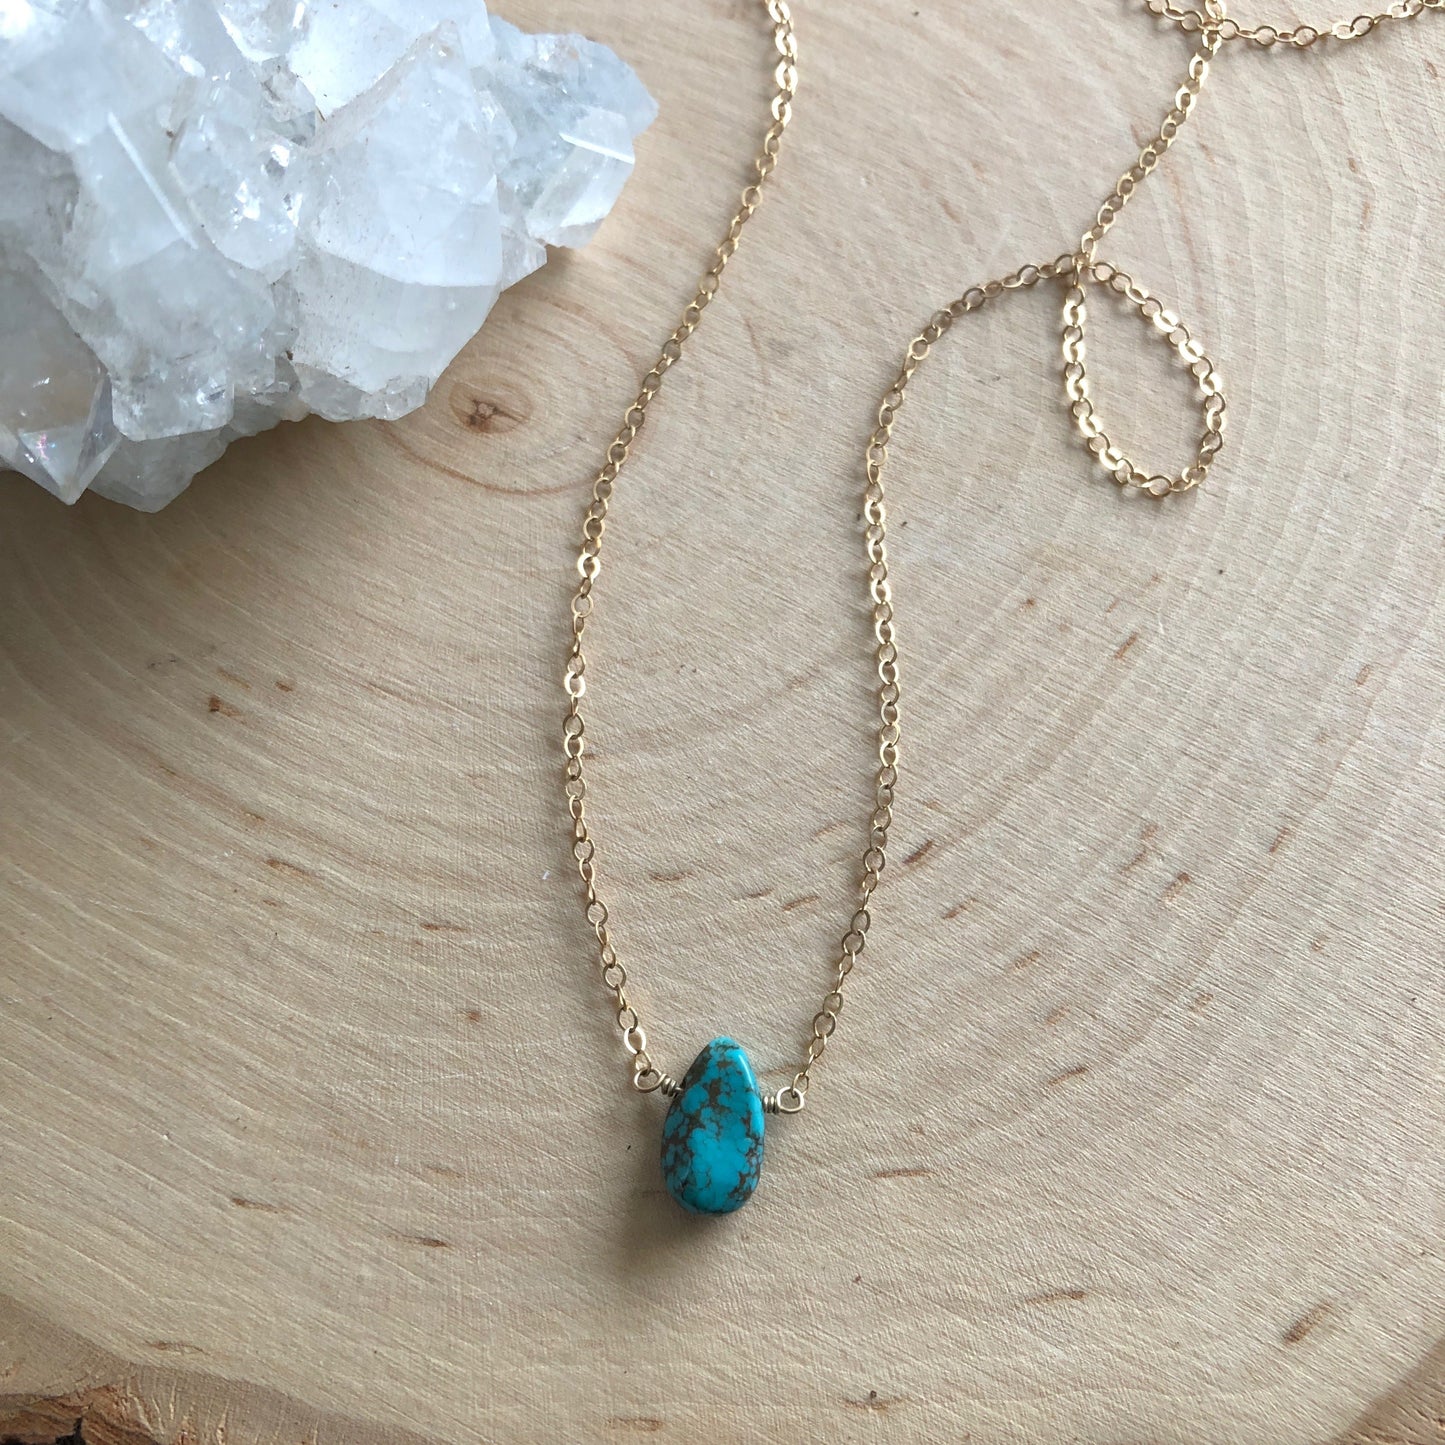 Mini Turquoise Pendant Necklace